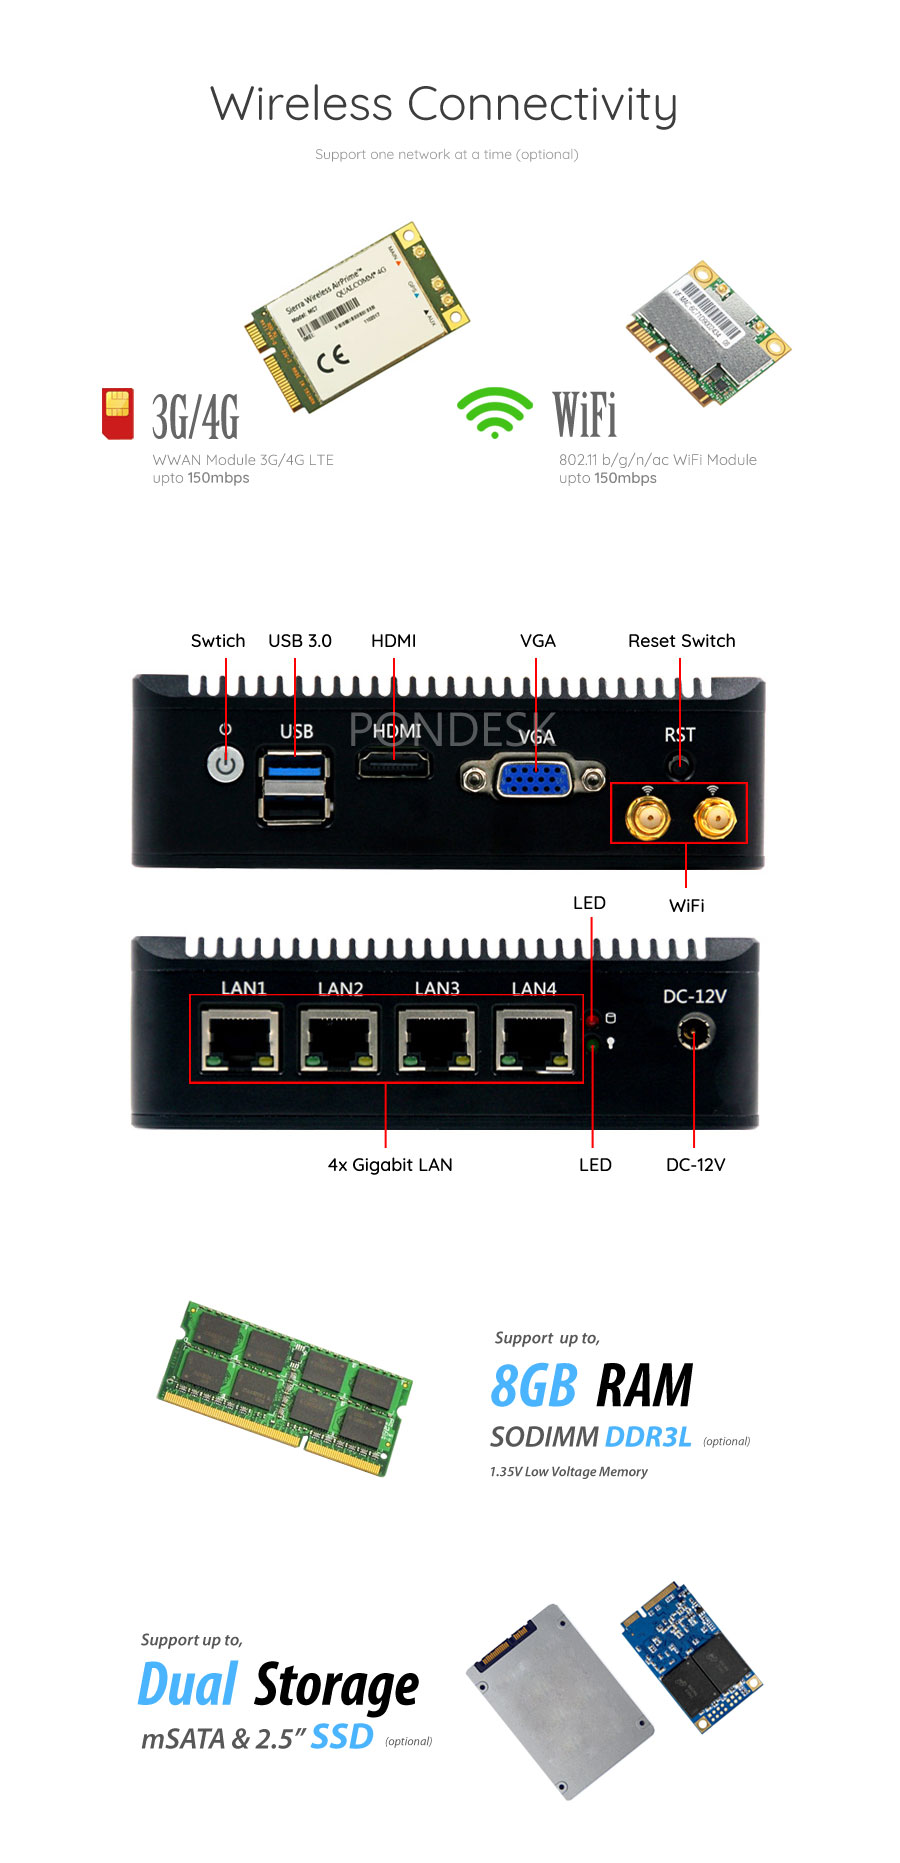 Intel Atom® E3845 4 LAN AES-NI 3G/4G Fanless Firewall Router - MNHO-048 | Image